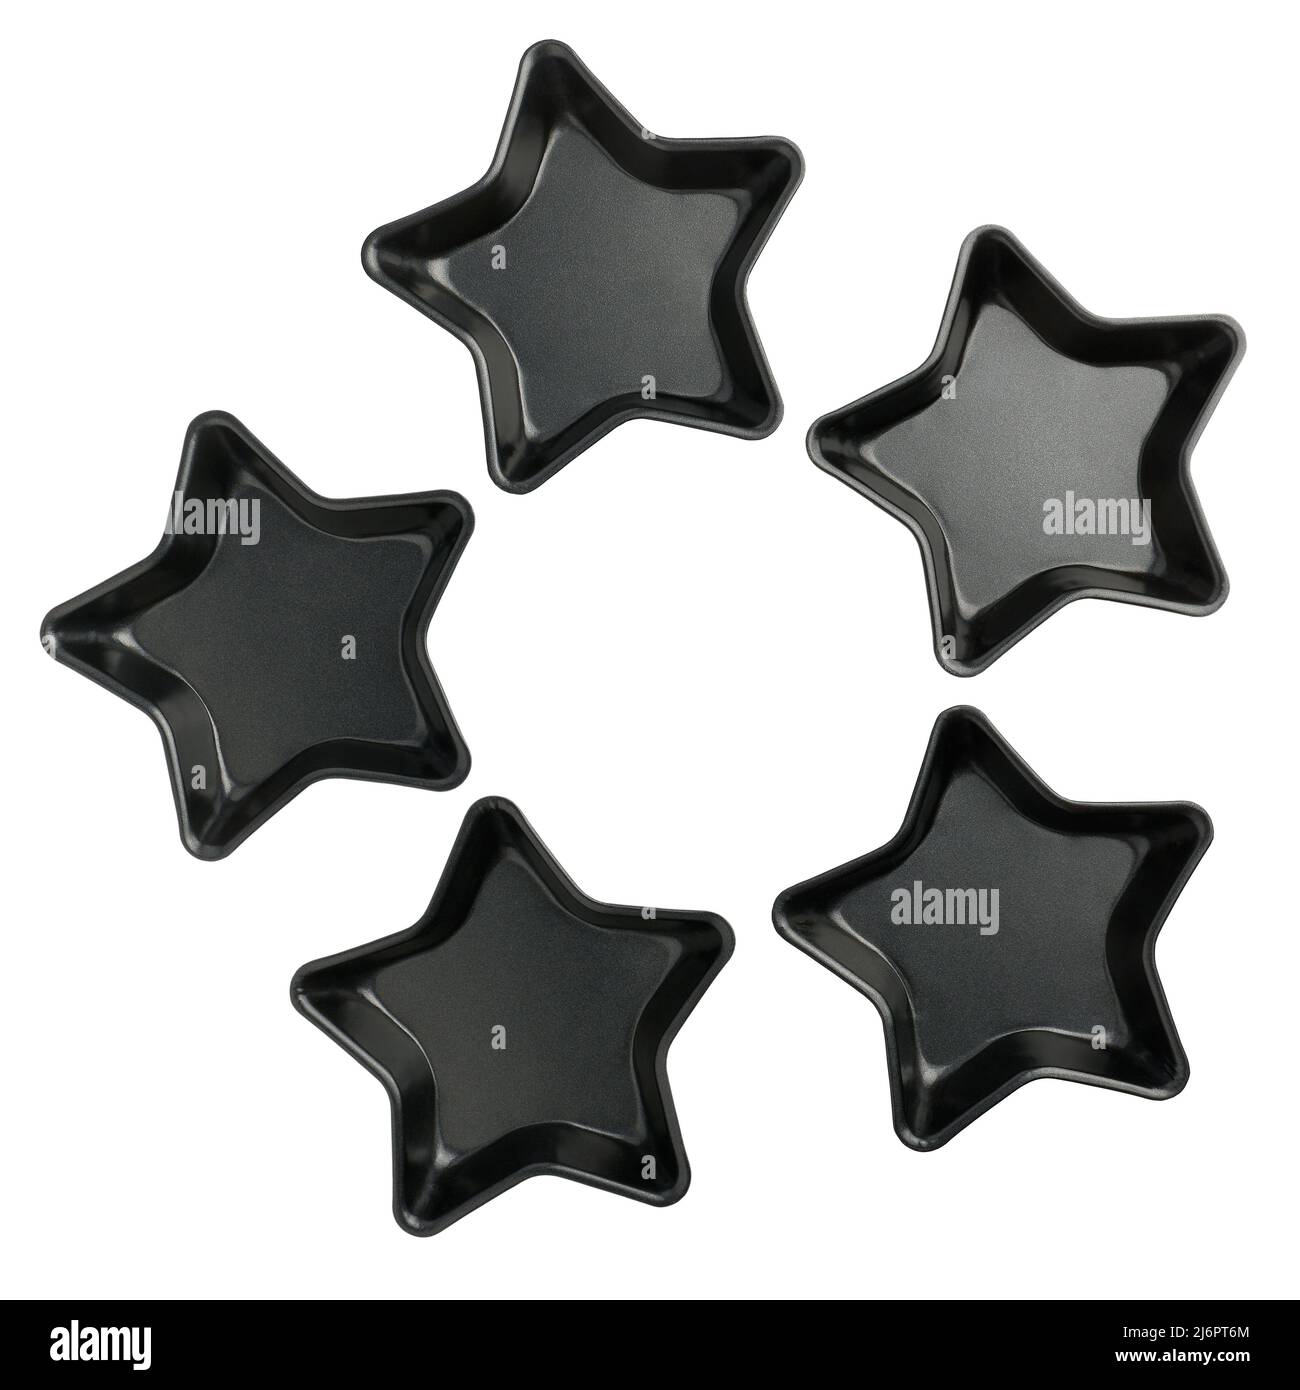 Metal star-shaped baking molds isolated on white background Stock Photo